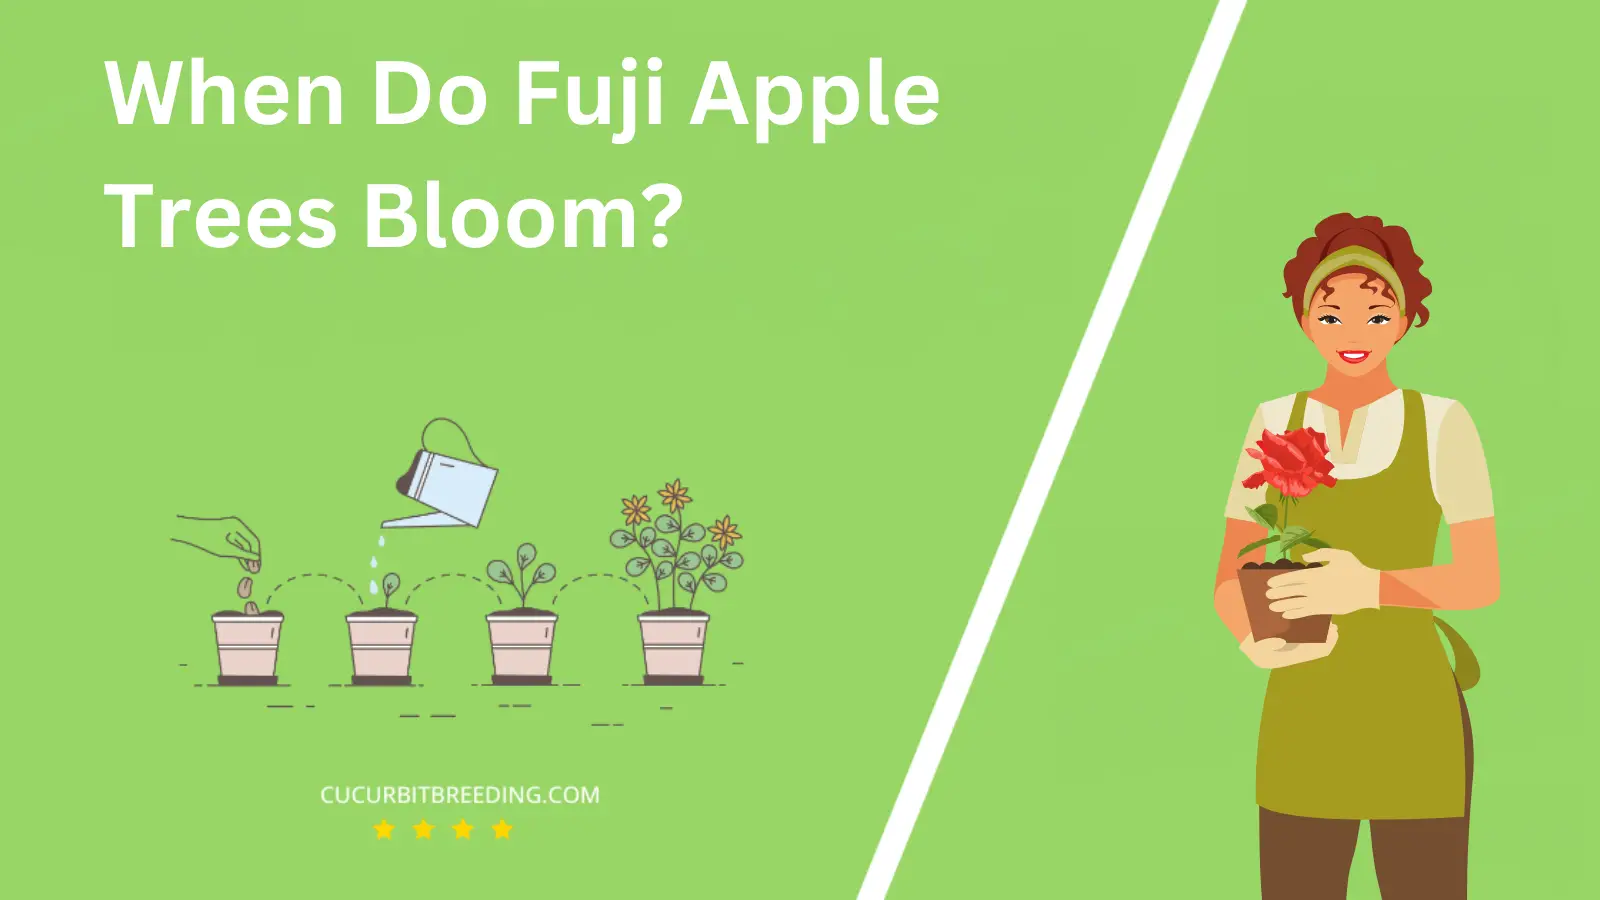 When Do Fuji Apple Trees Bloom?